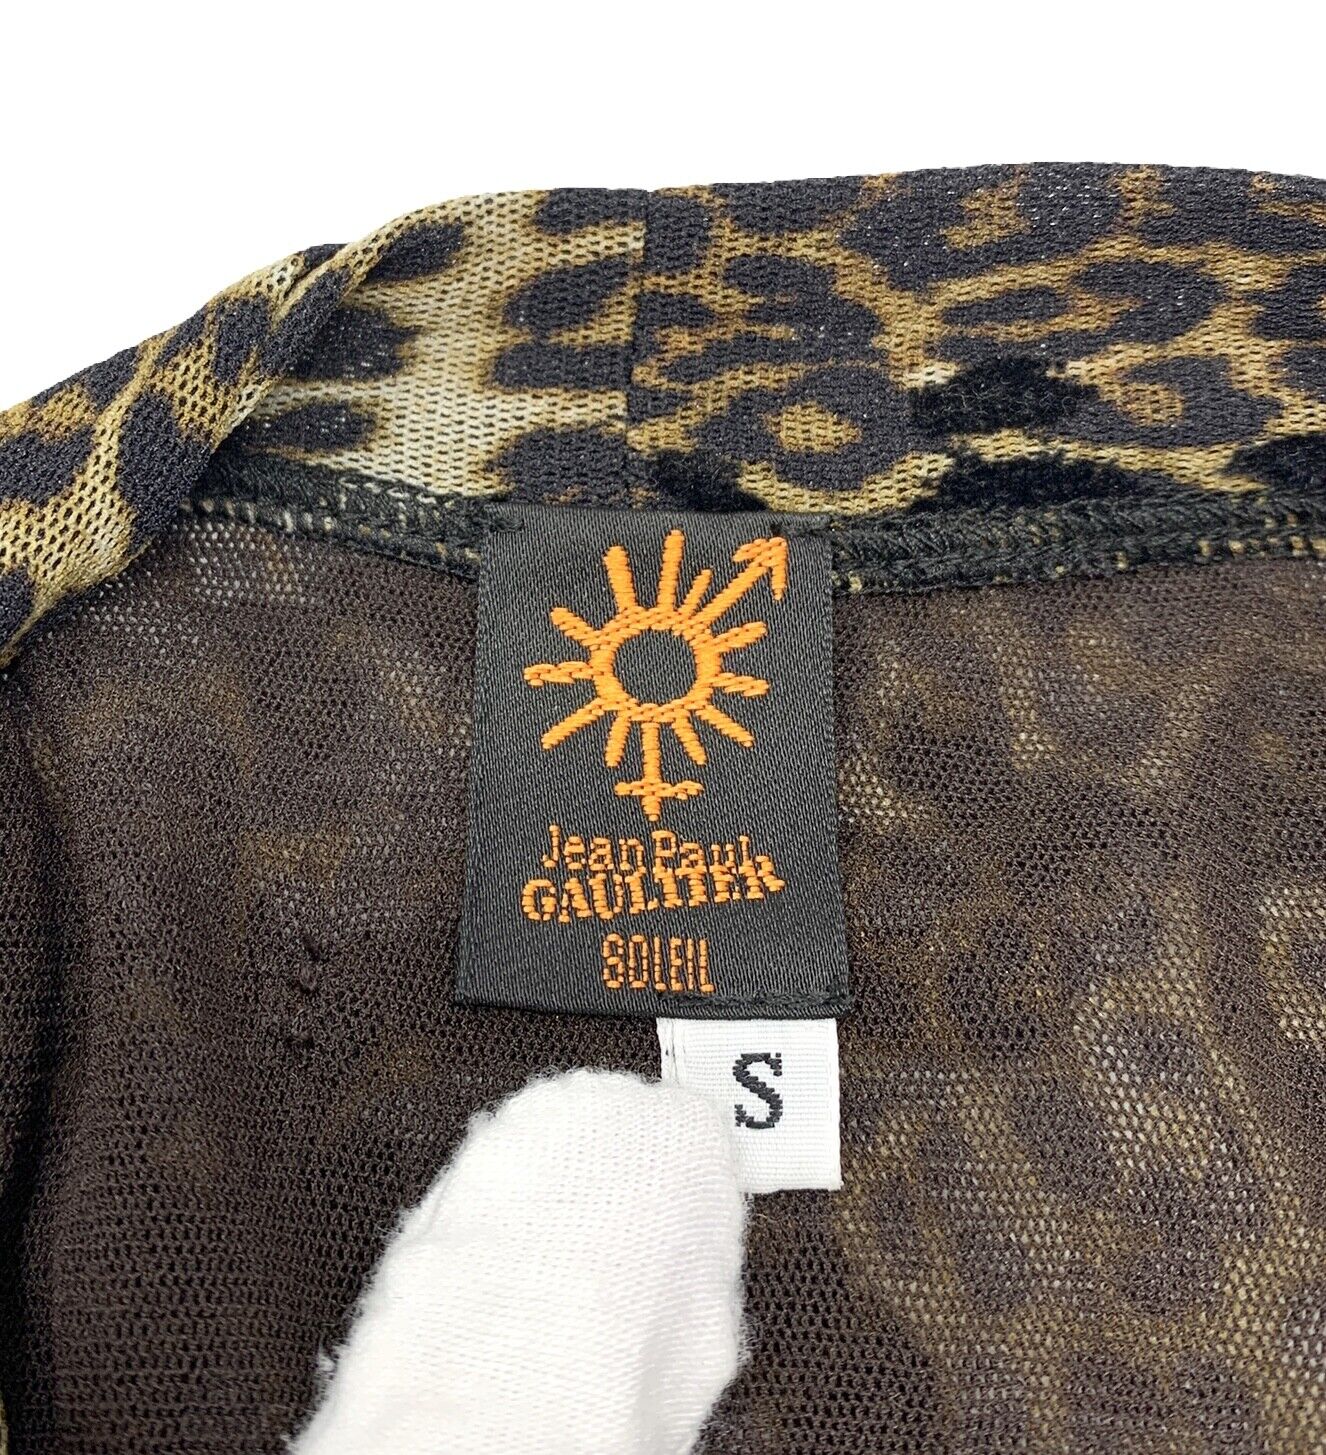 Jean Paul GAULTIER Vintage 1999 Powernet Leopard Shirts #S Top Scarf Beige RankA